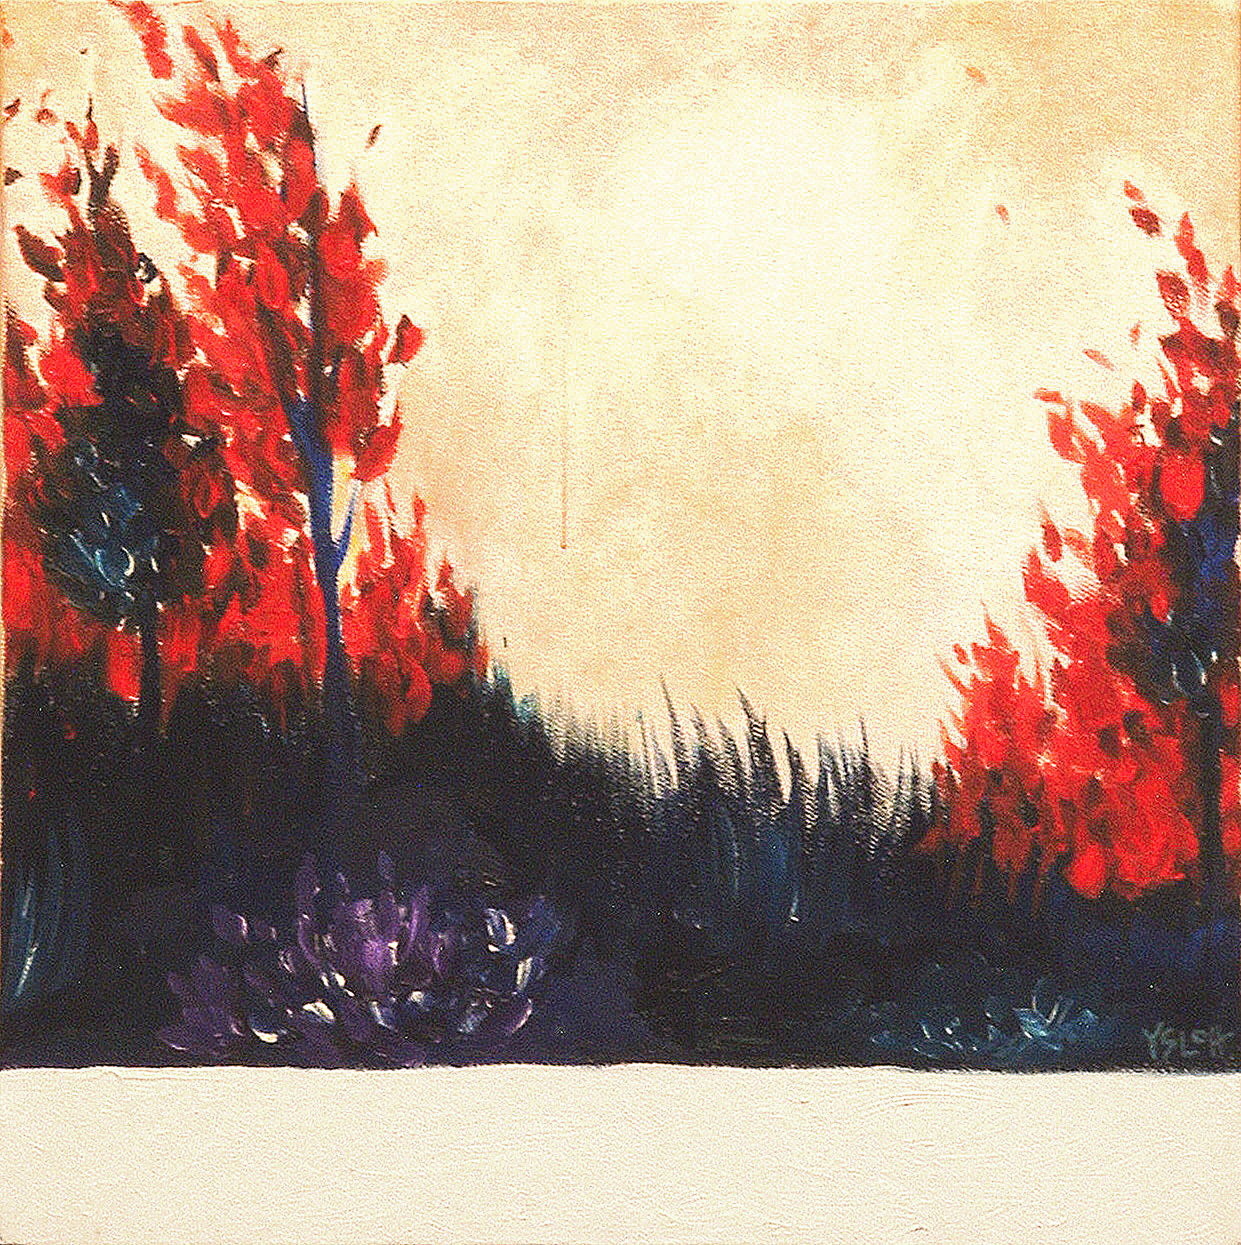   Burning Landscape No.3   oil on canvas, 12 x 12 